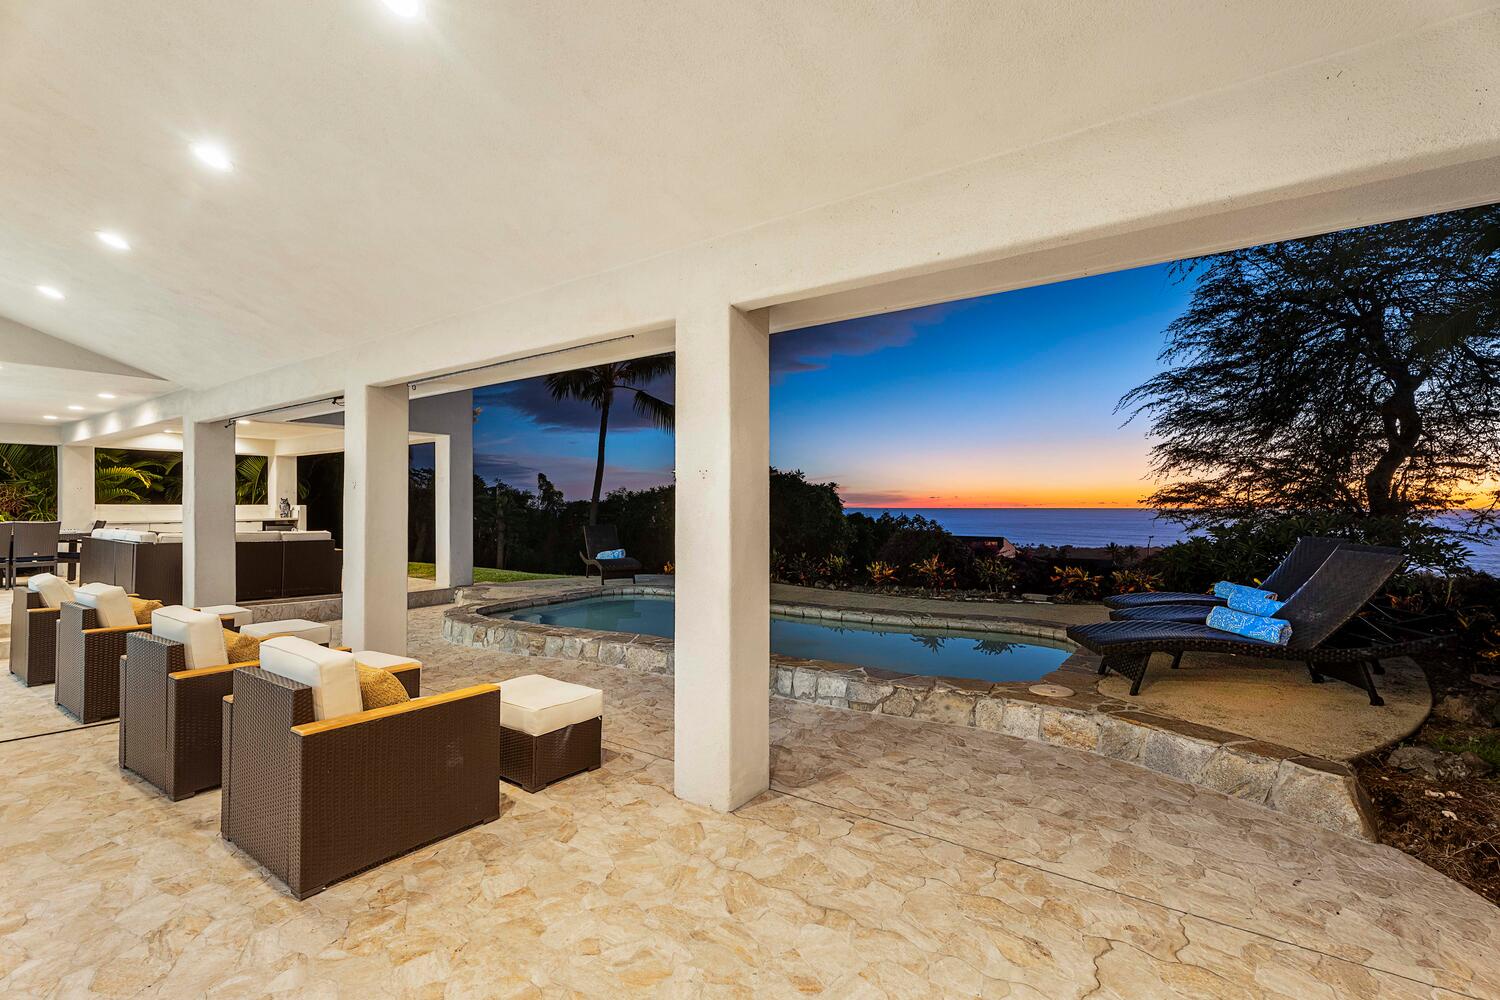 Kailua Kona Vacation Rentals, Ho'okipa Hale - Panoramic backyard with ocean views.